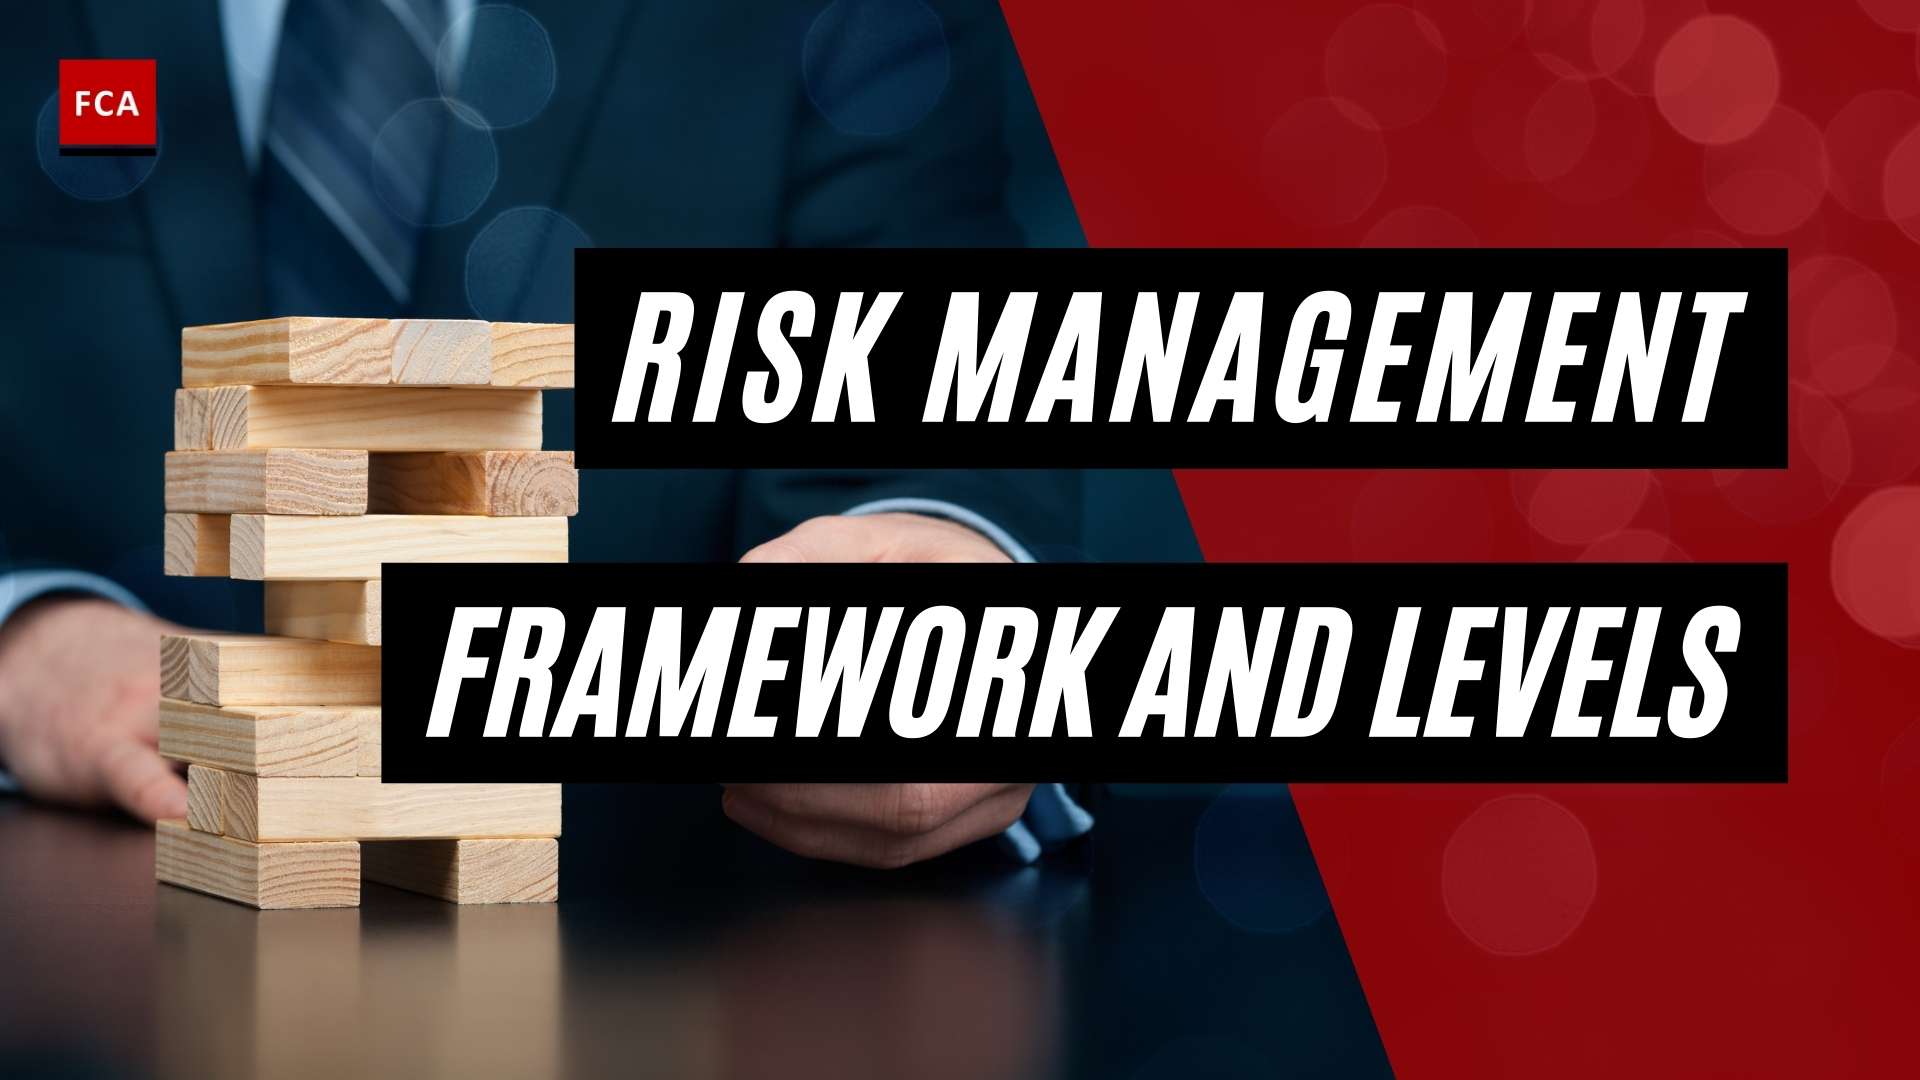 Risk Management Framework And Levels  - Featured Image